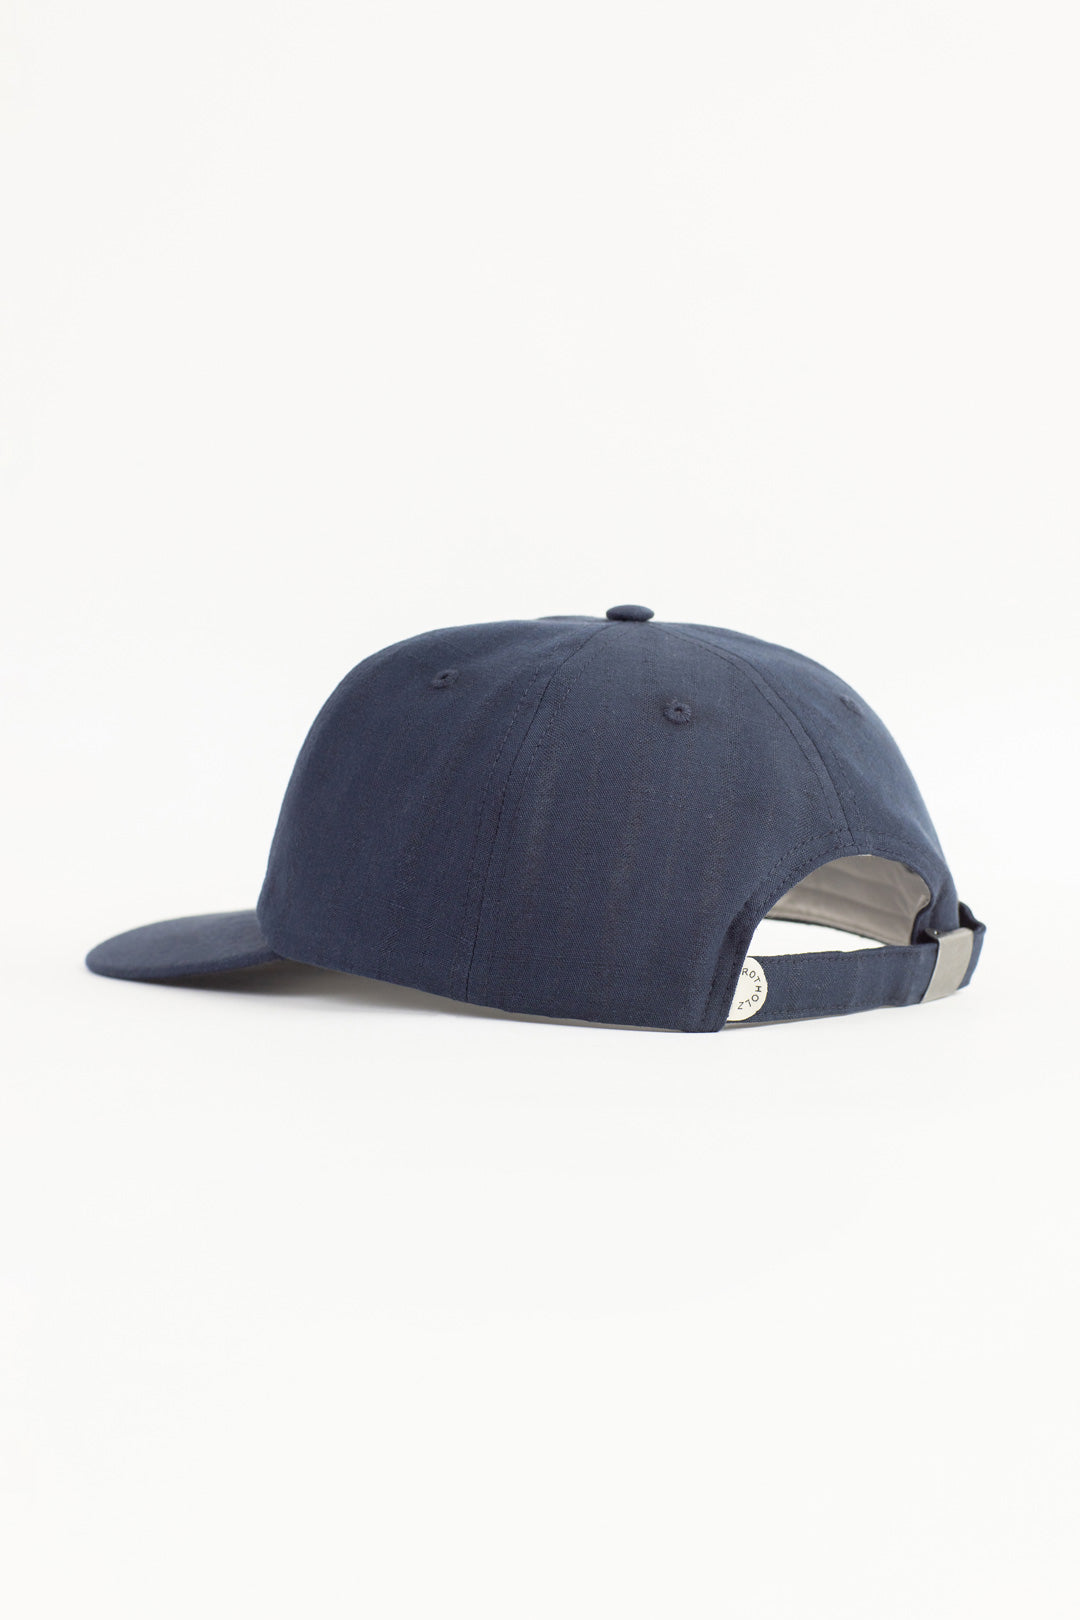 Dark blue Floppy cap made of organic cotton by Rotholz